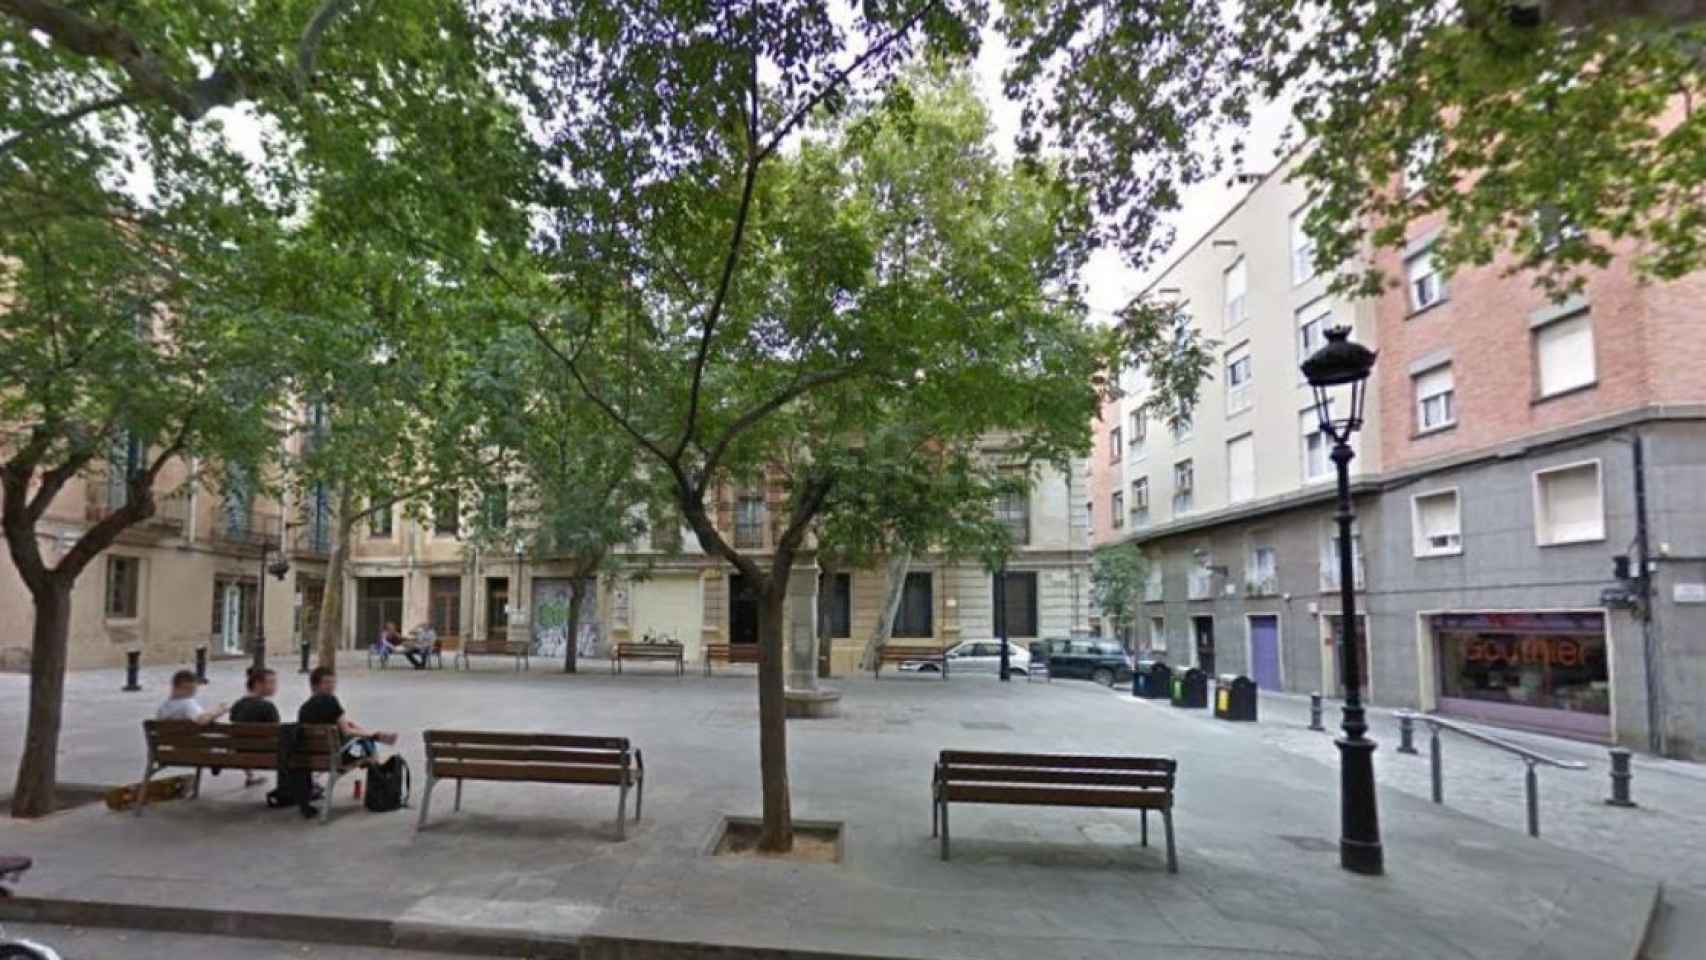 Una plaza del barrio de Sarrià, donde apareció el violador reincidente